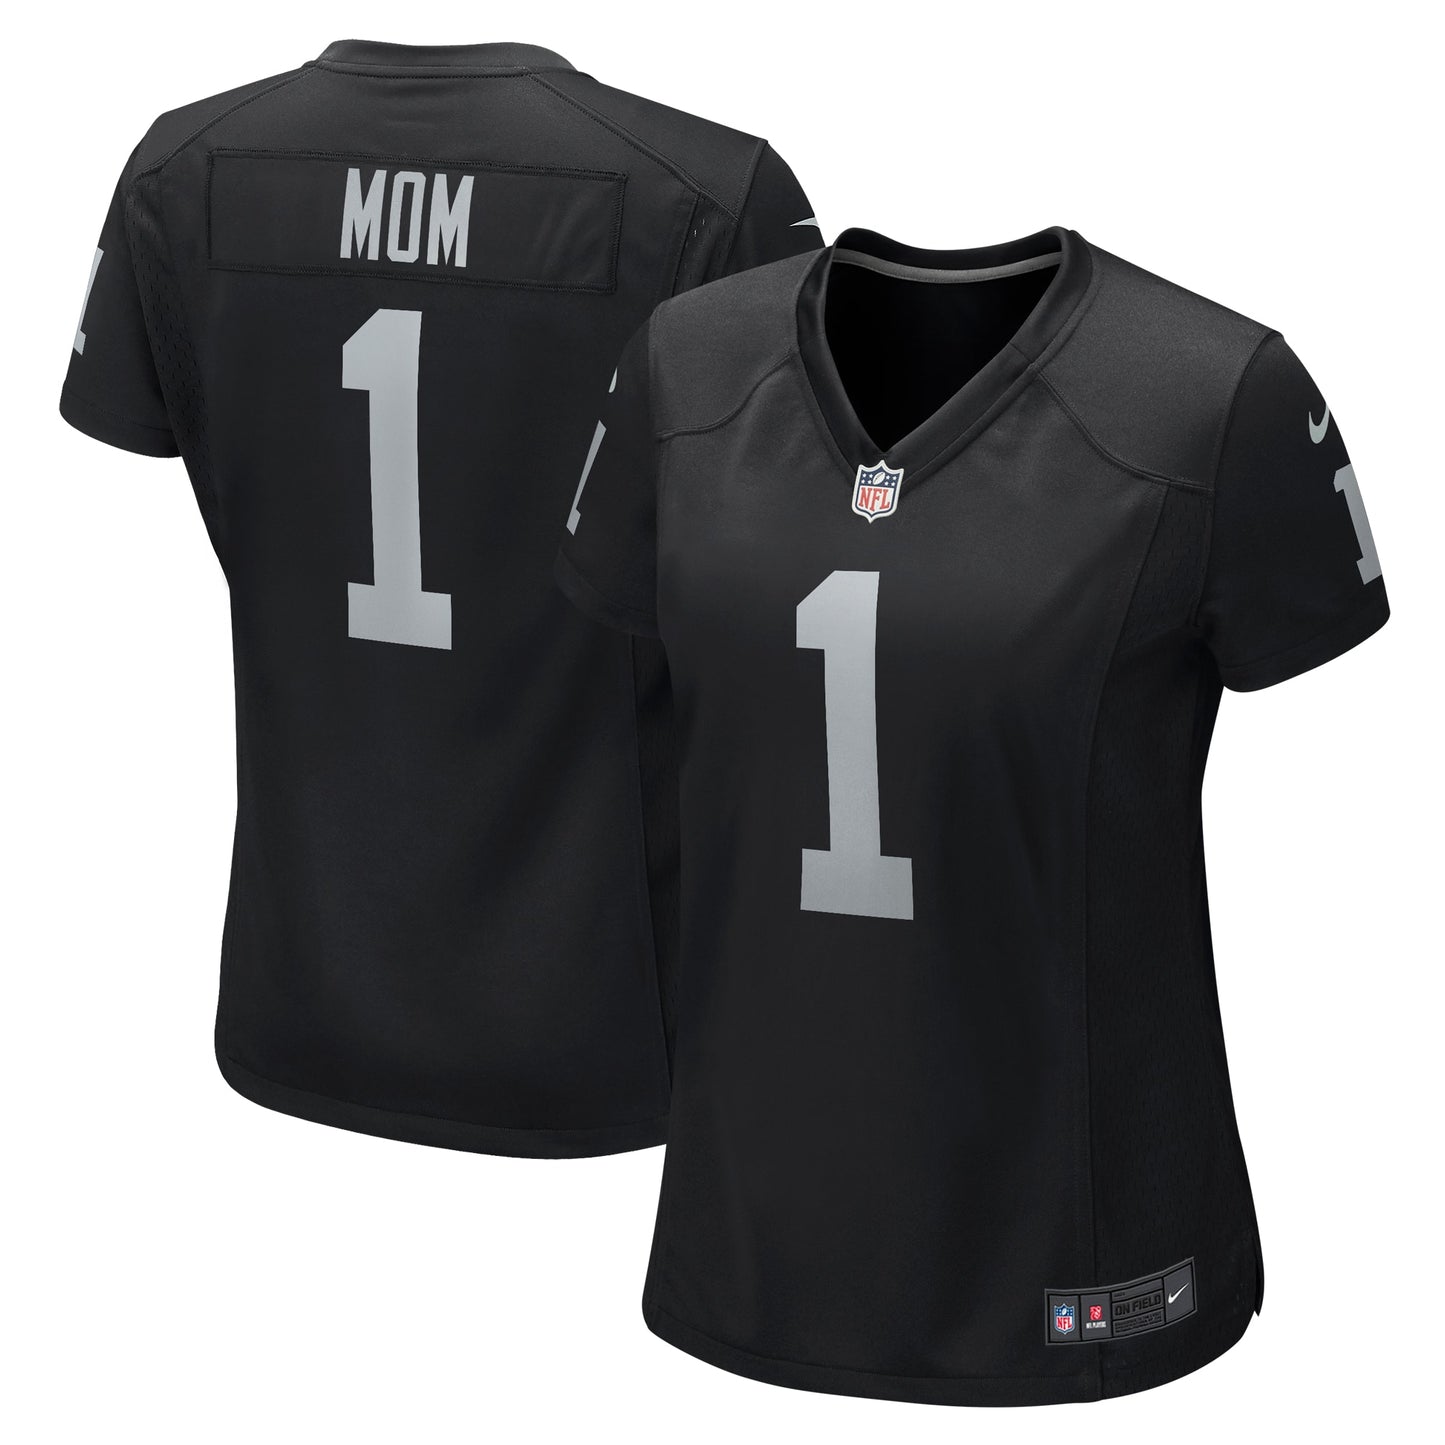 Number 1 Mom Las Vegas Raiders Nike Women's Game Jersey - Black